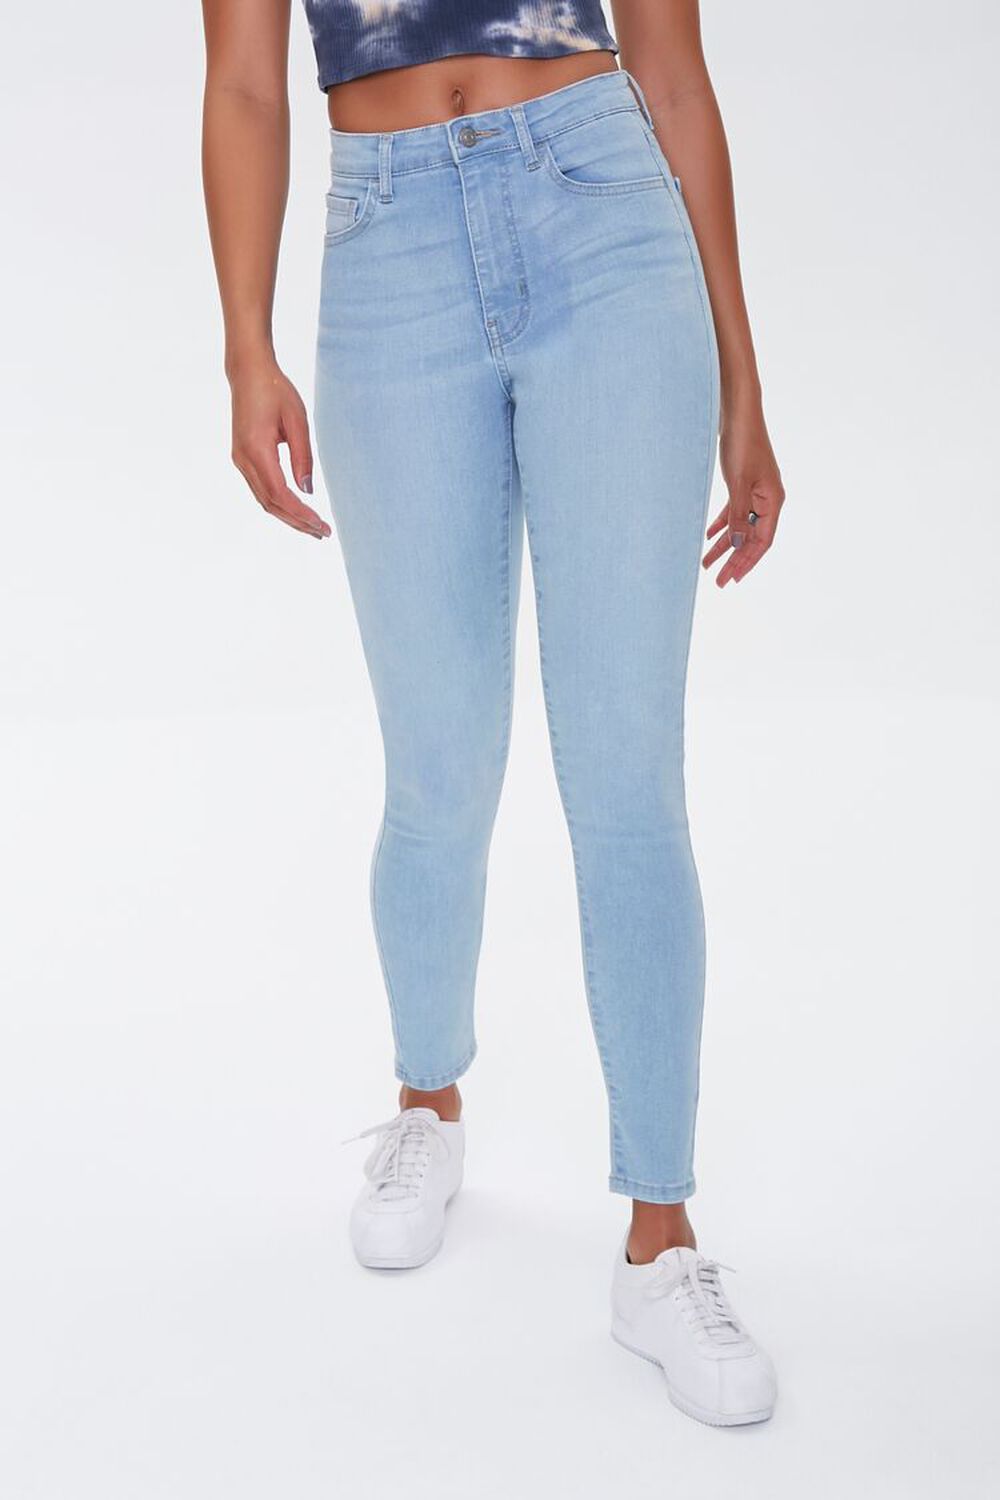 LIGHT DENIM Mid-Rise Skinny Jeans, image 1